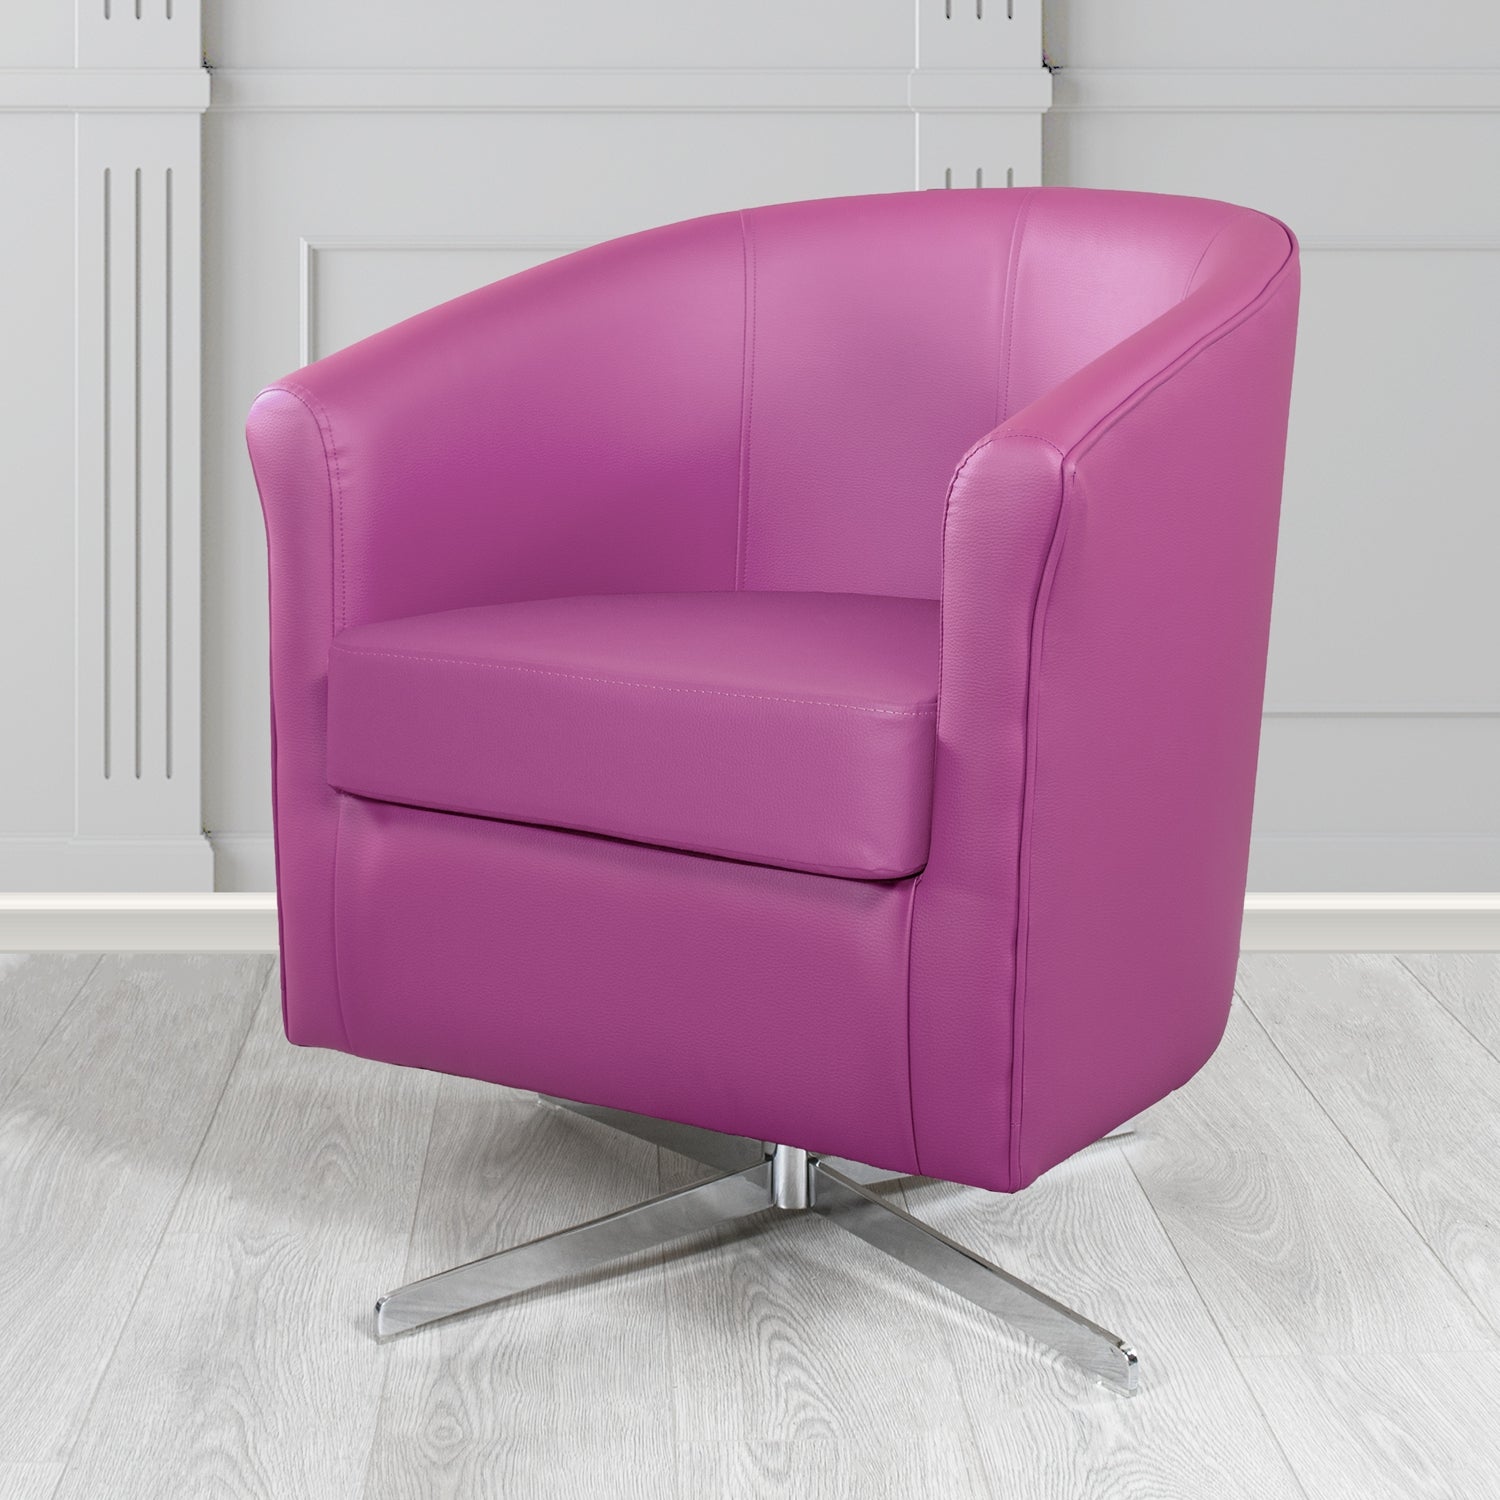 Cannes Swivel Tub Chair in Just Colour Fuchsia Crib 5 Faux Leather - The Tub Chair Shop